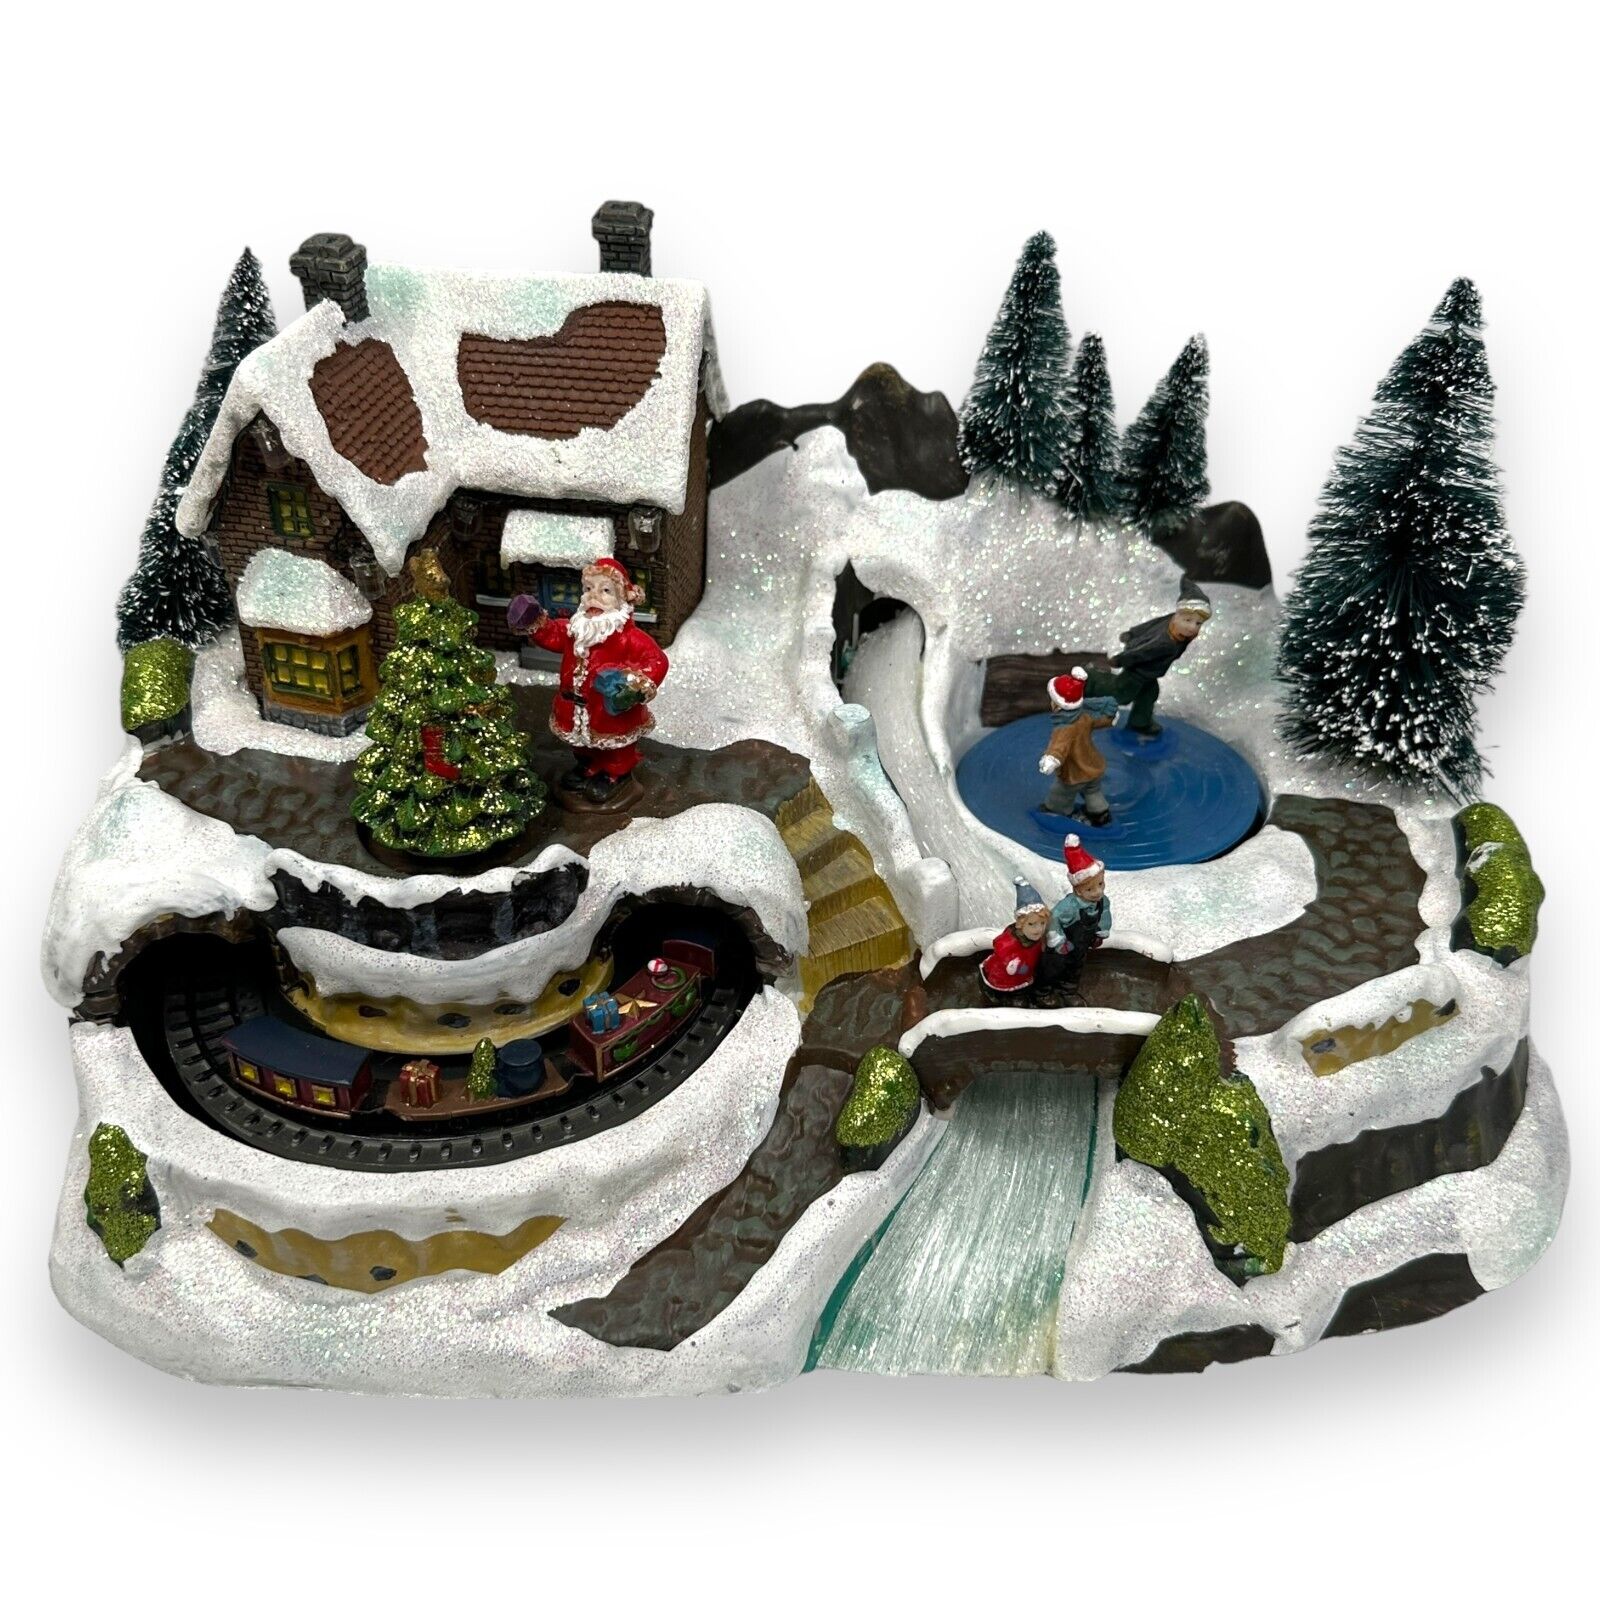 Avon Winter Wonderland Animated Fiber Optic Musical Decorative Christmas Village